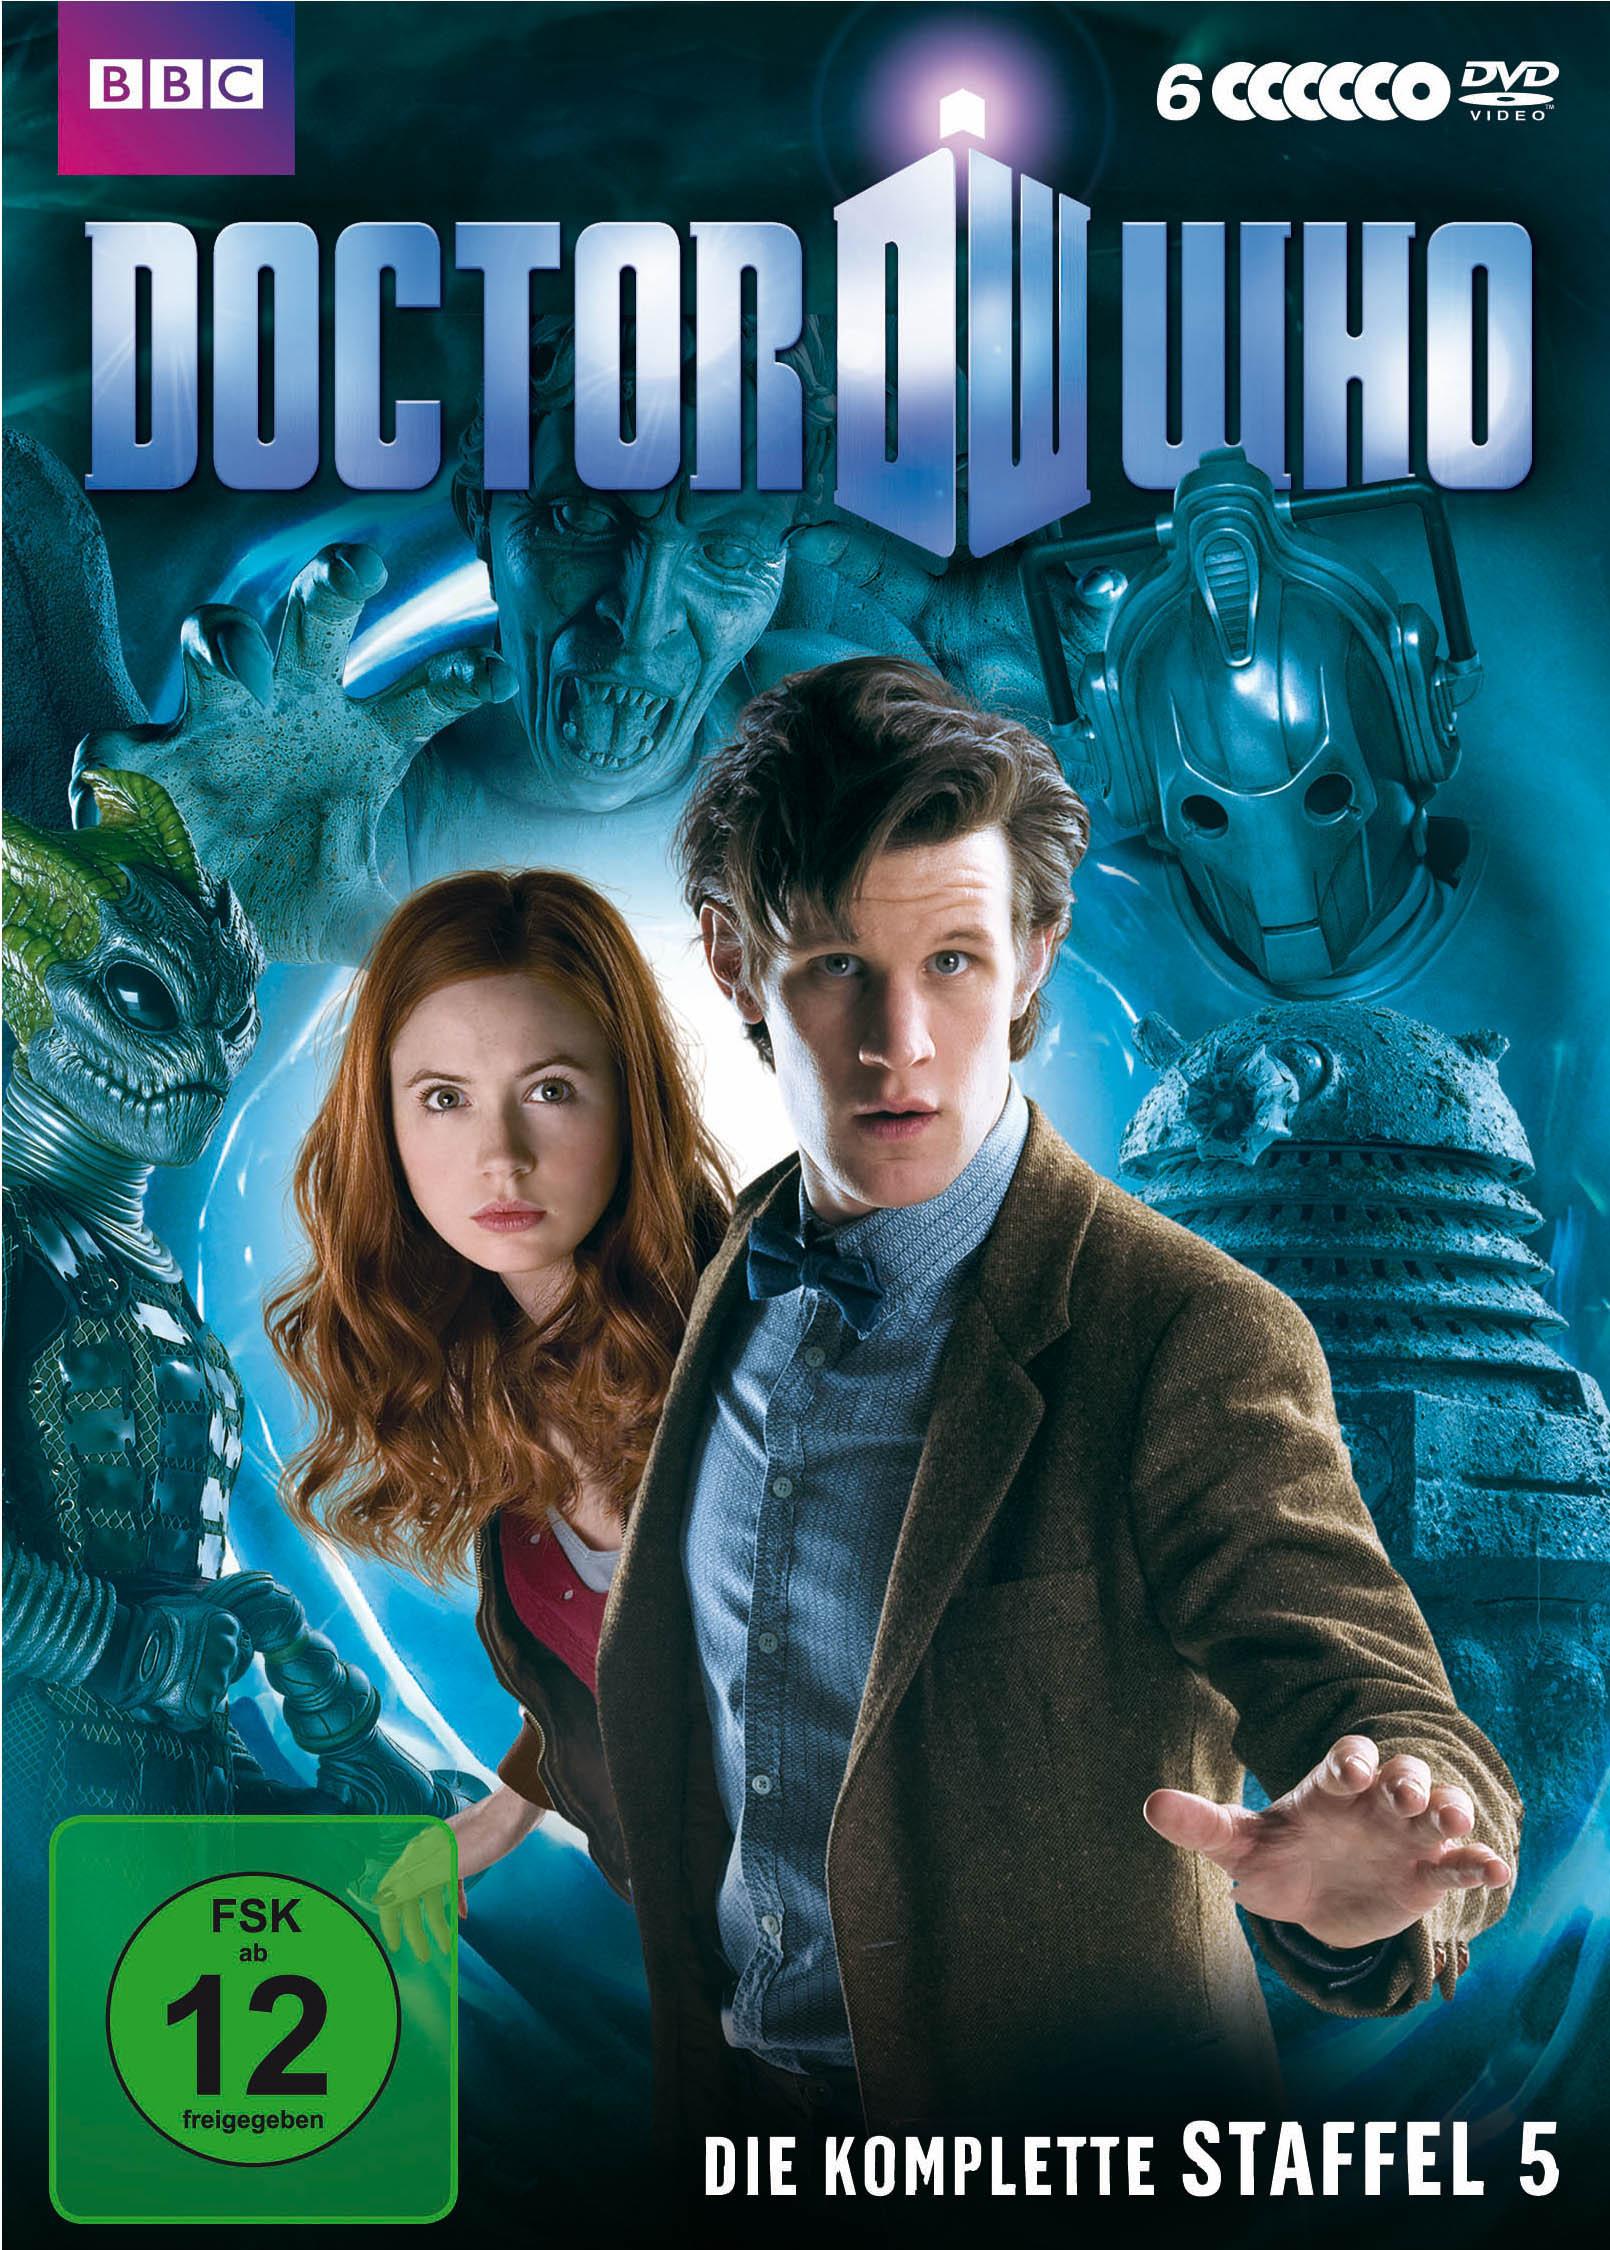 5 Staffel - DVD Who Doctor